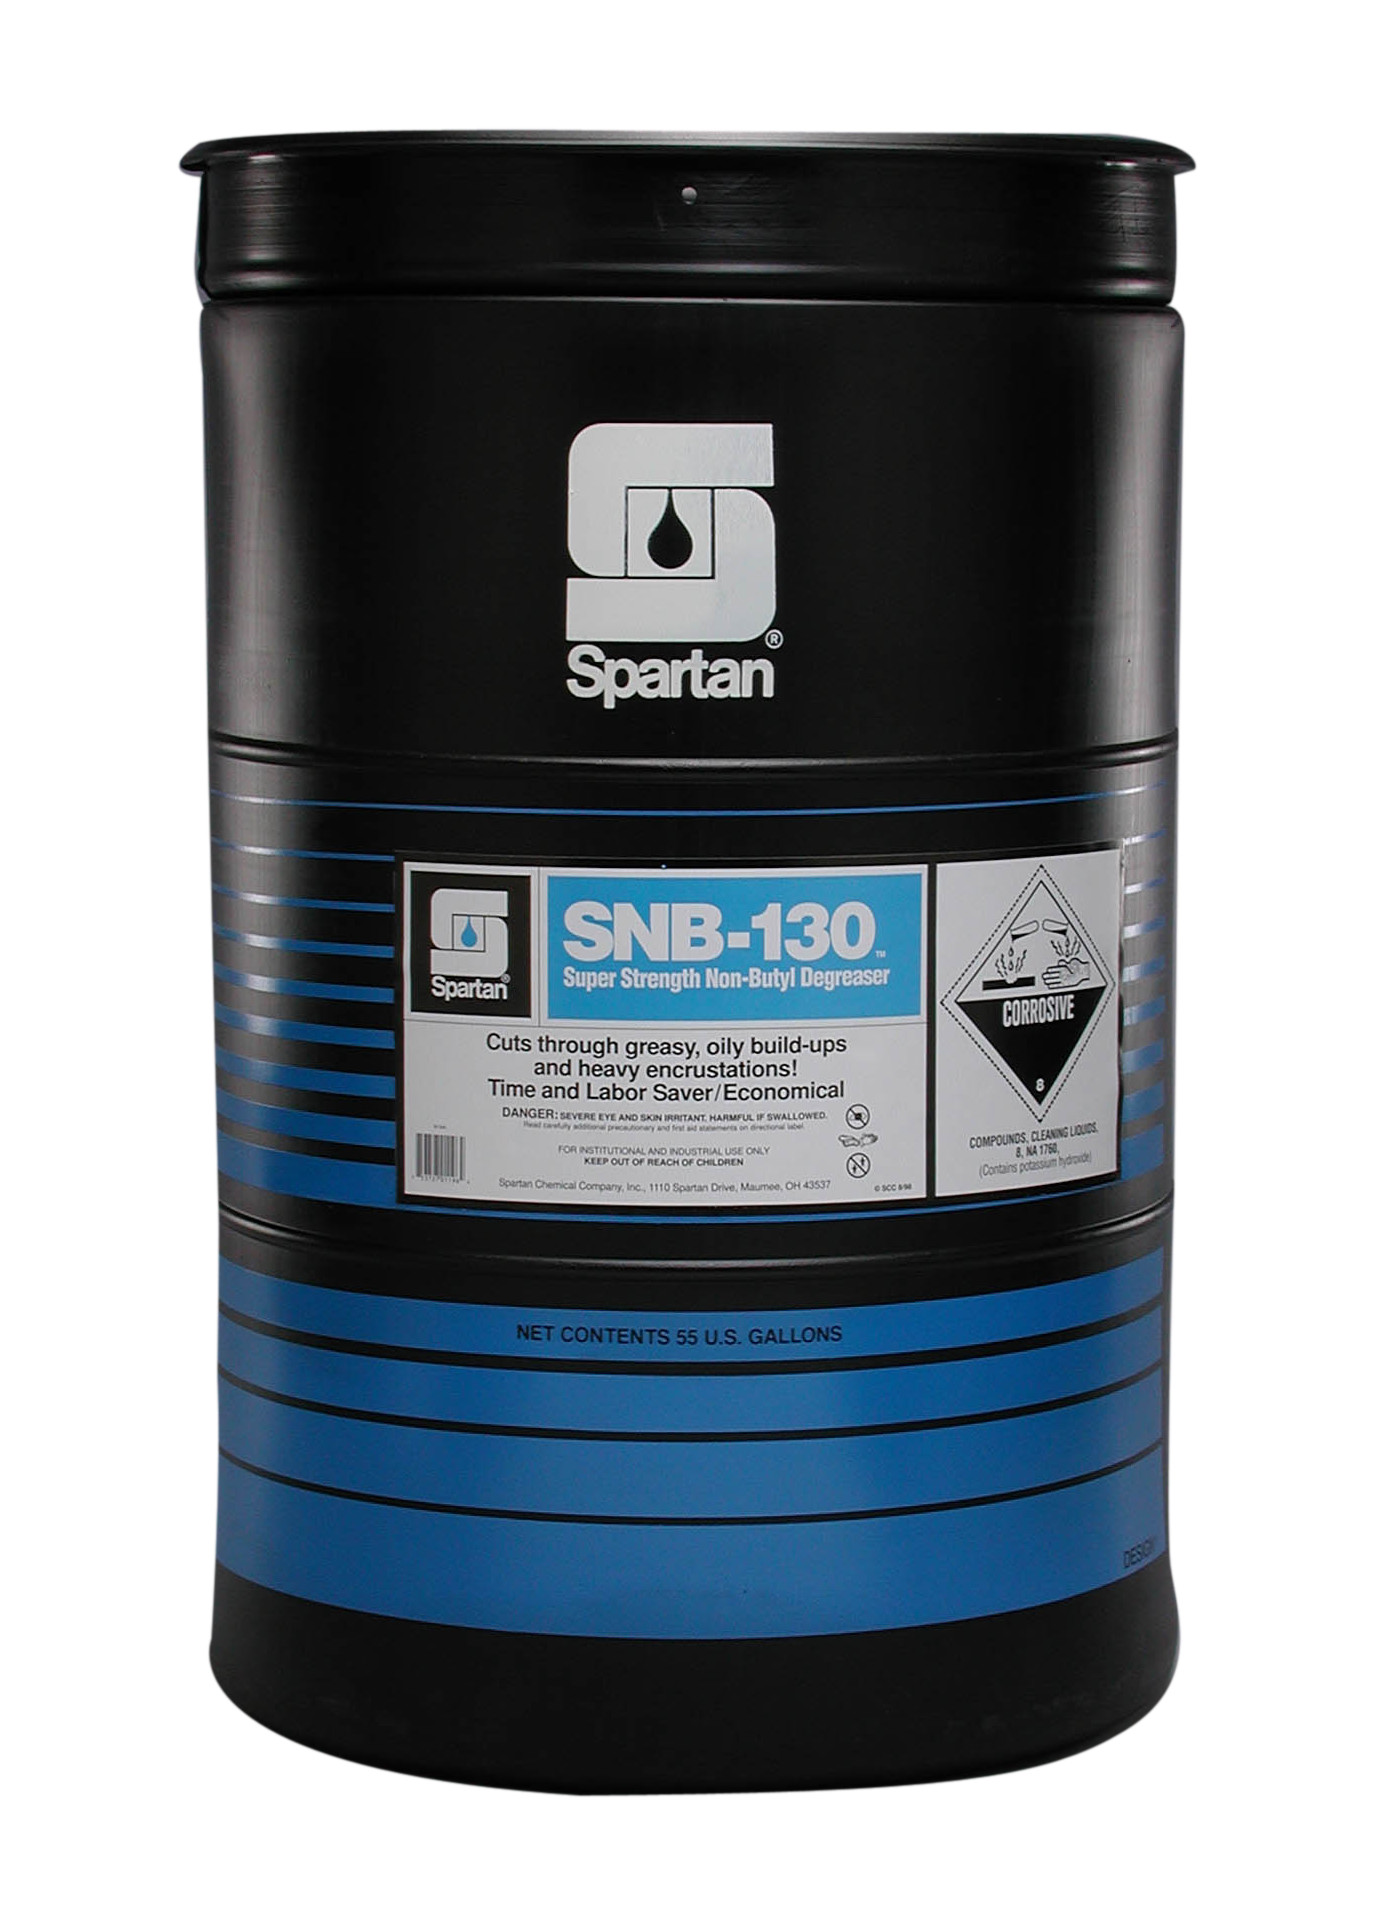 Spartan Chemical Company SNB-130, 55 GAL DRUM